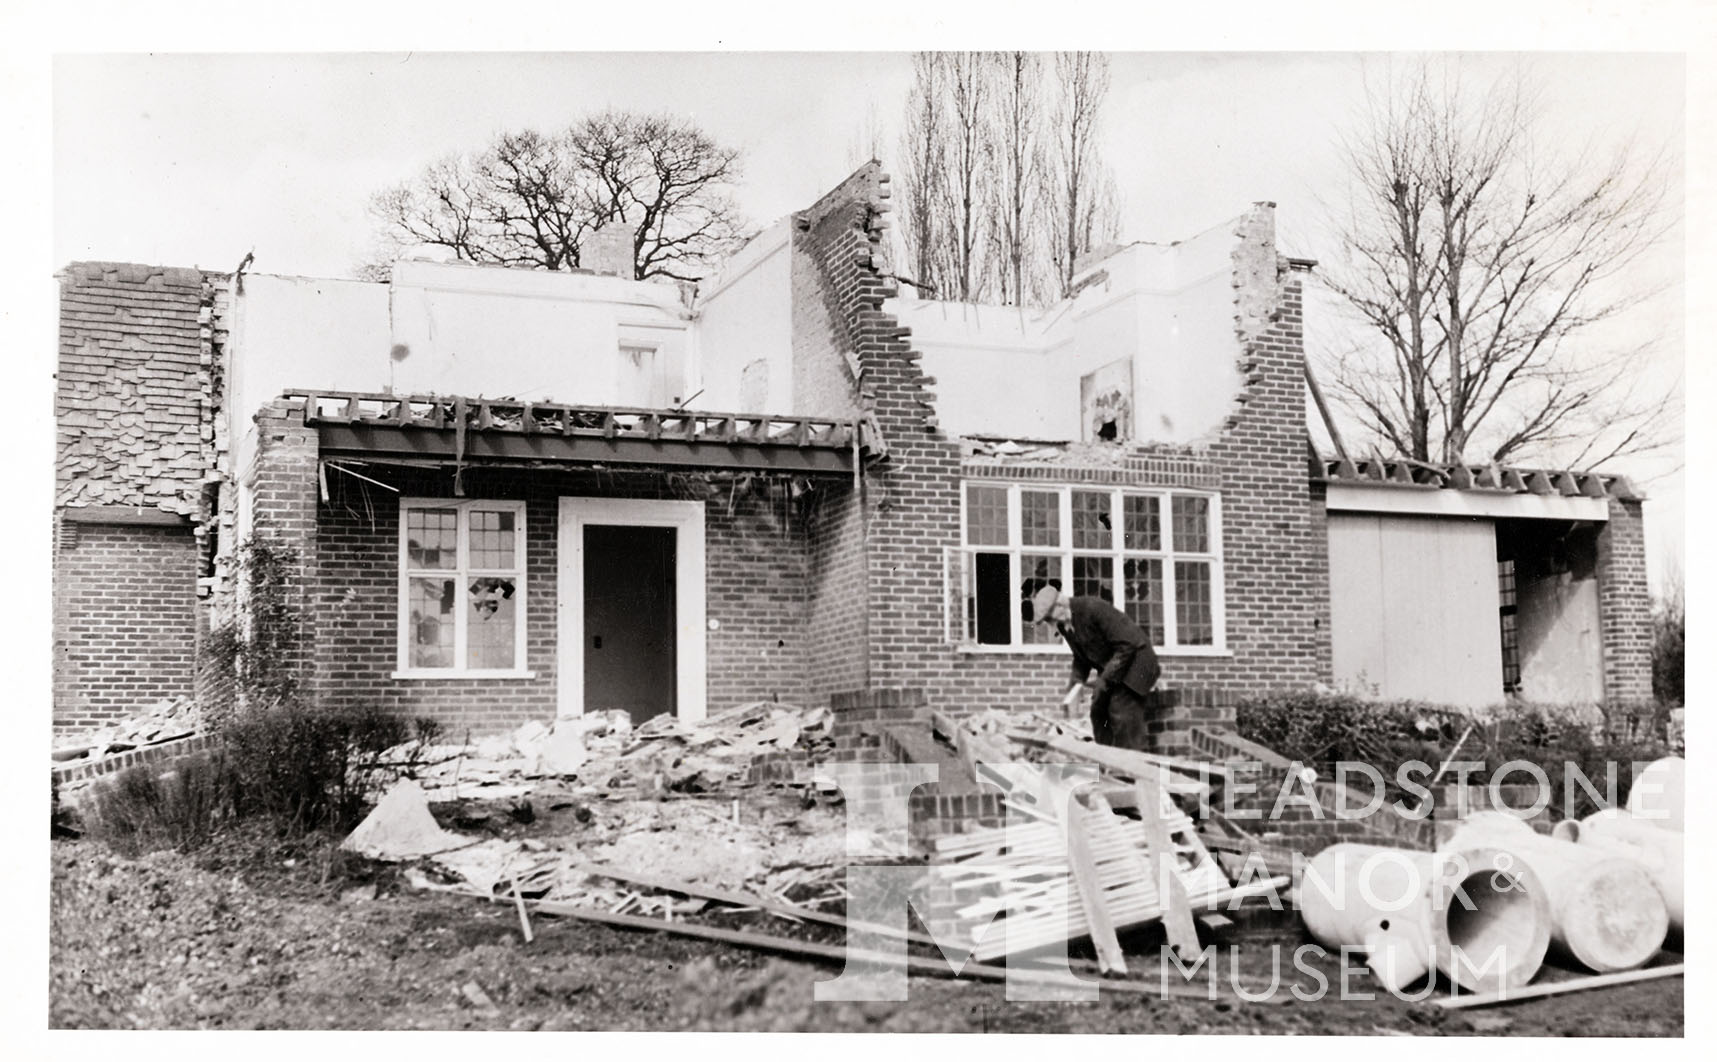 Elms Road, House Demolition